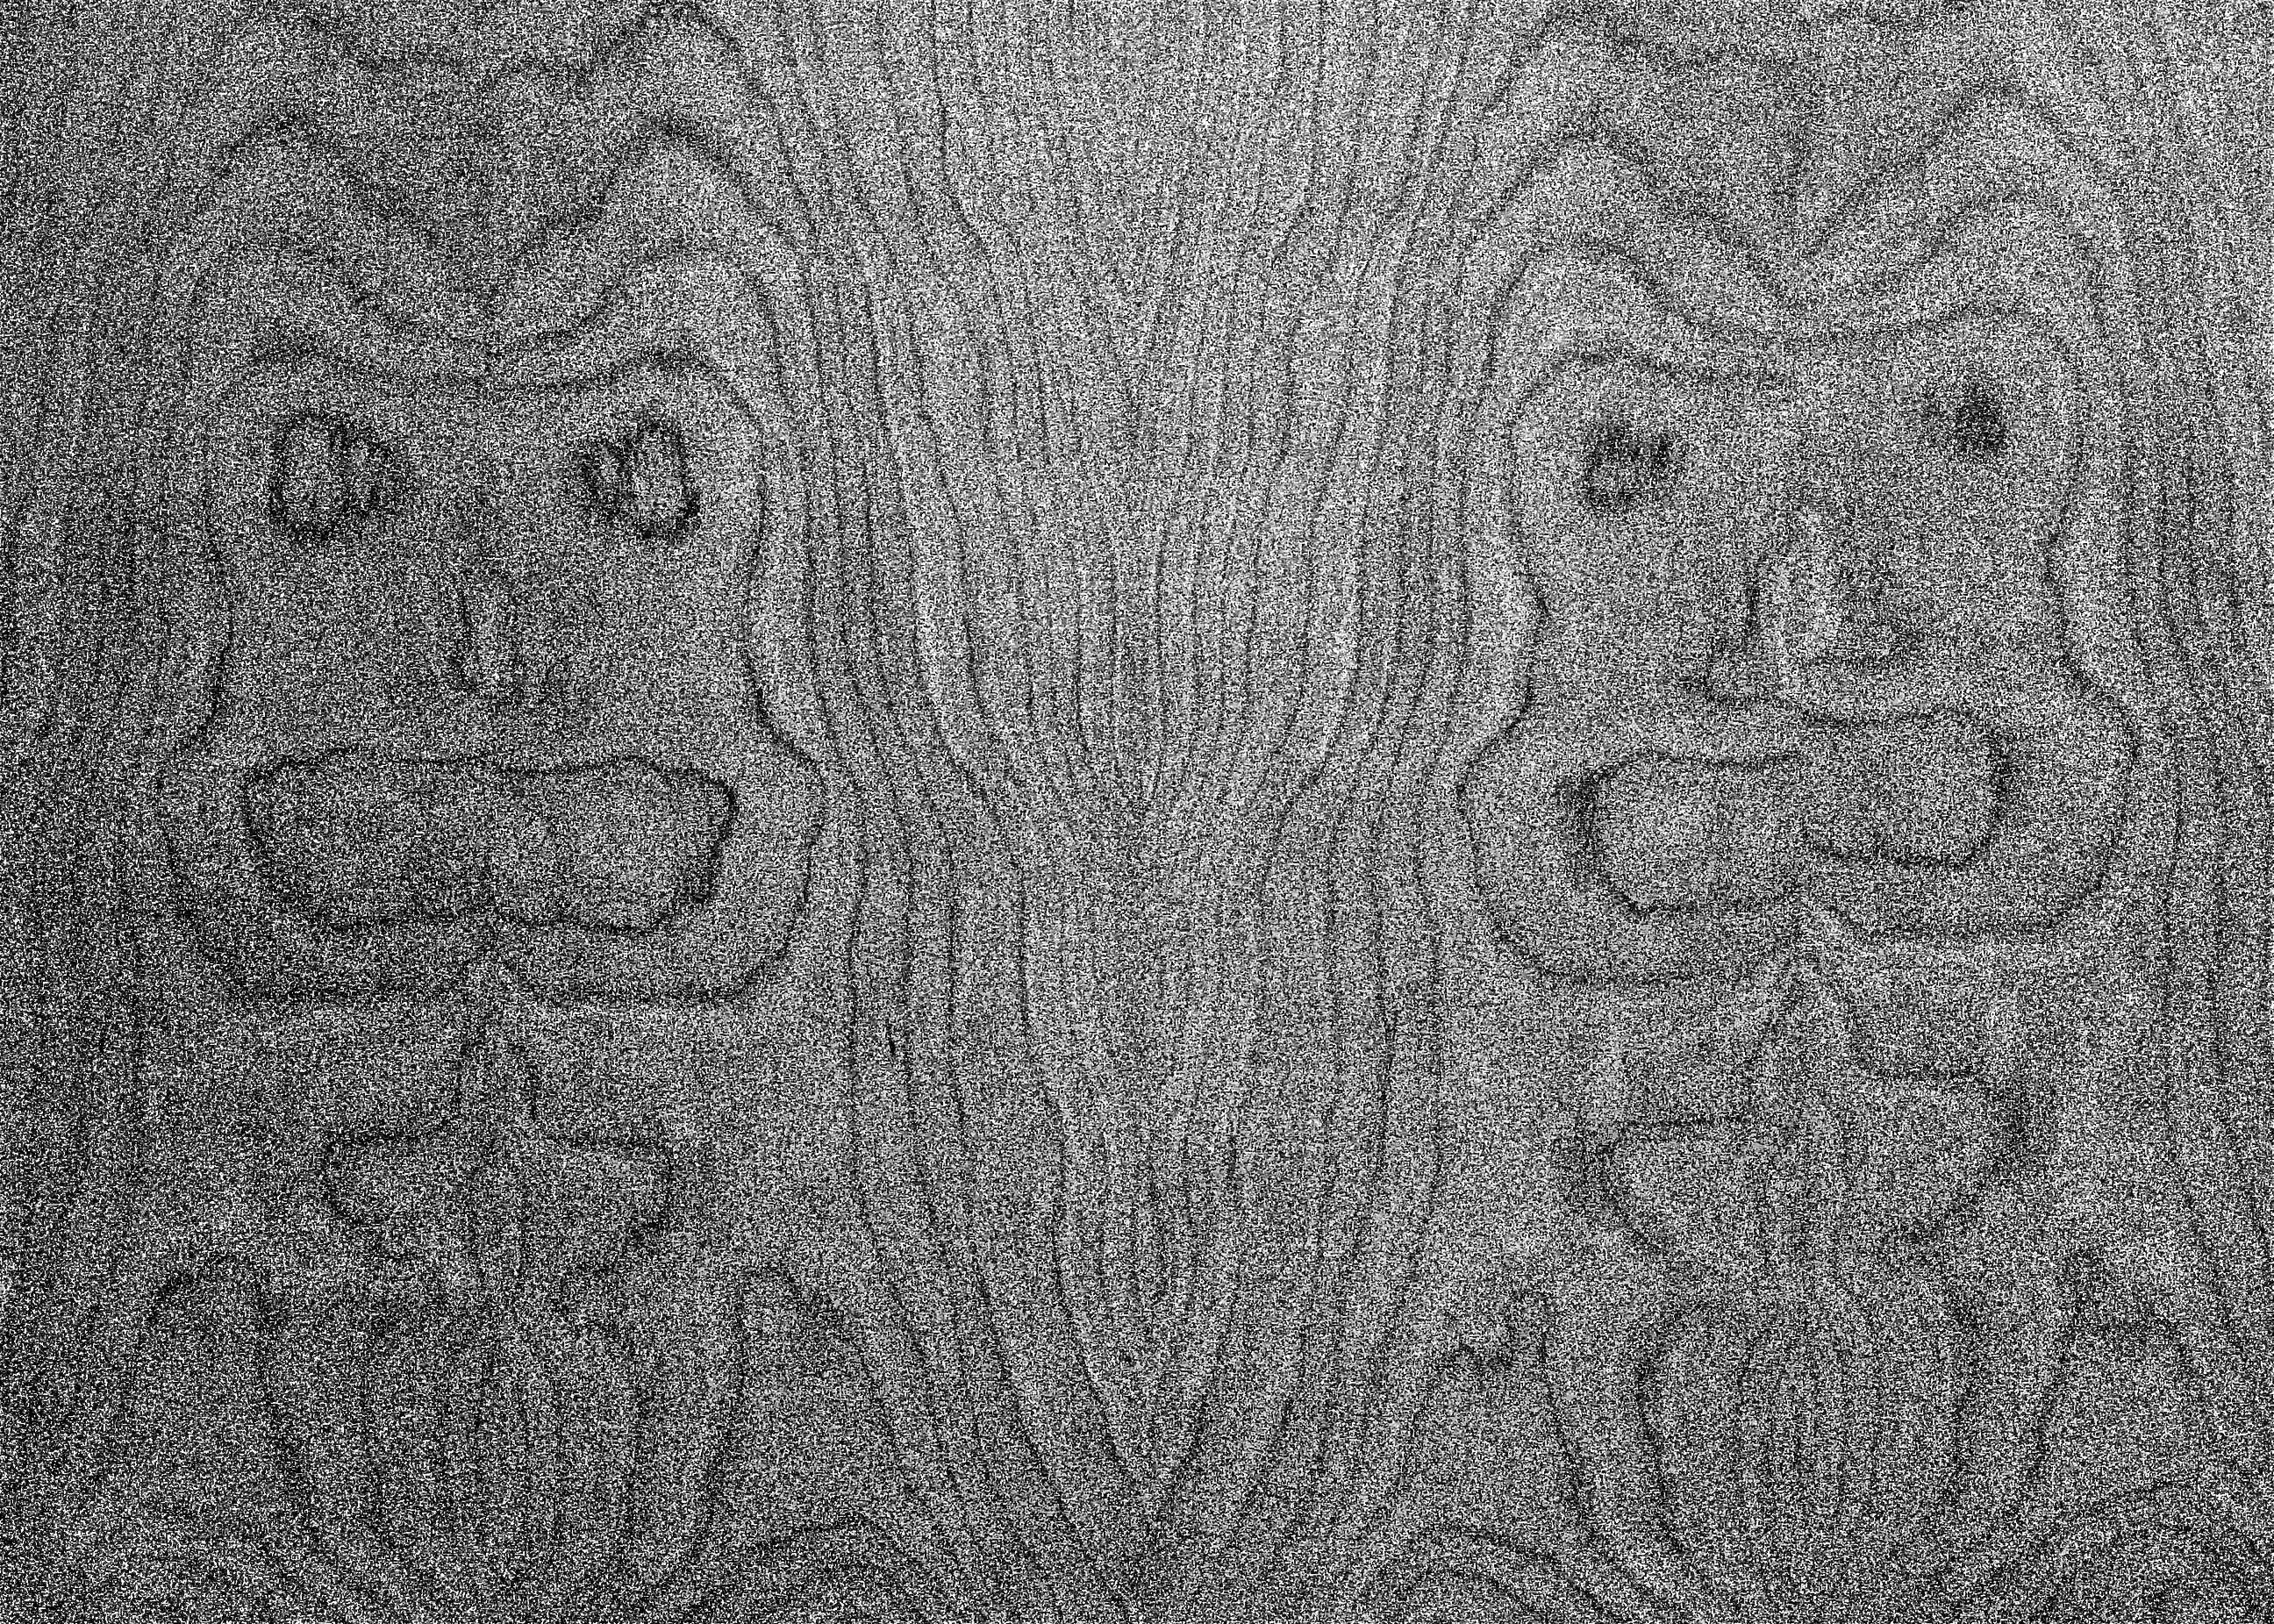 faces in wood grain